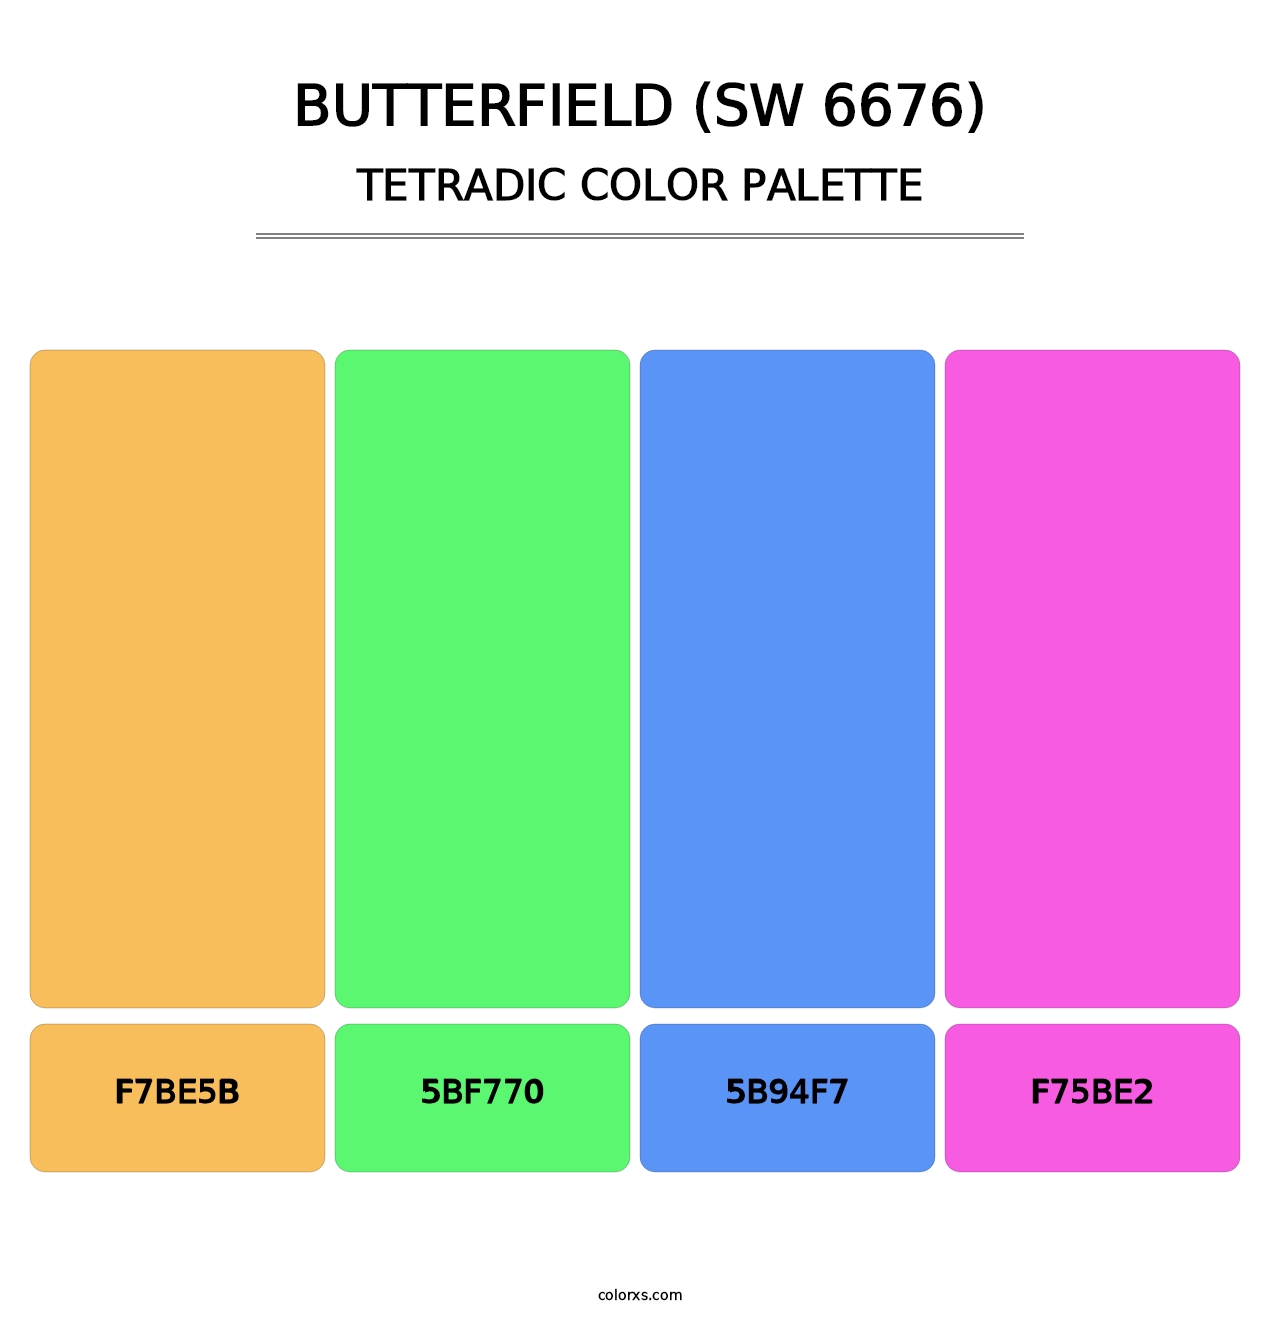 Butterfield (SW 6676) - Tetradic Color Palette